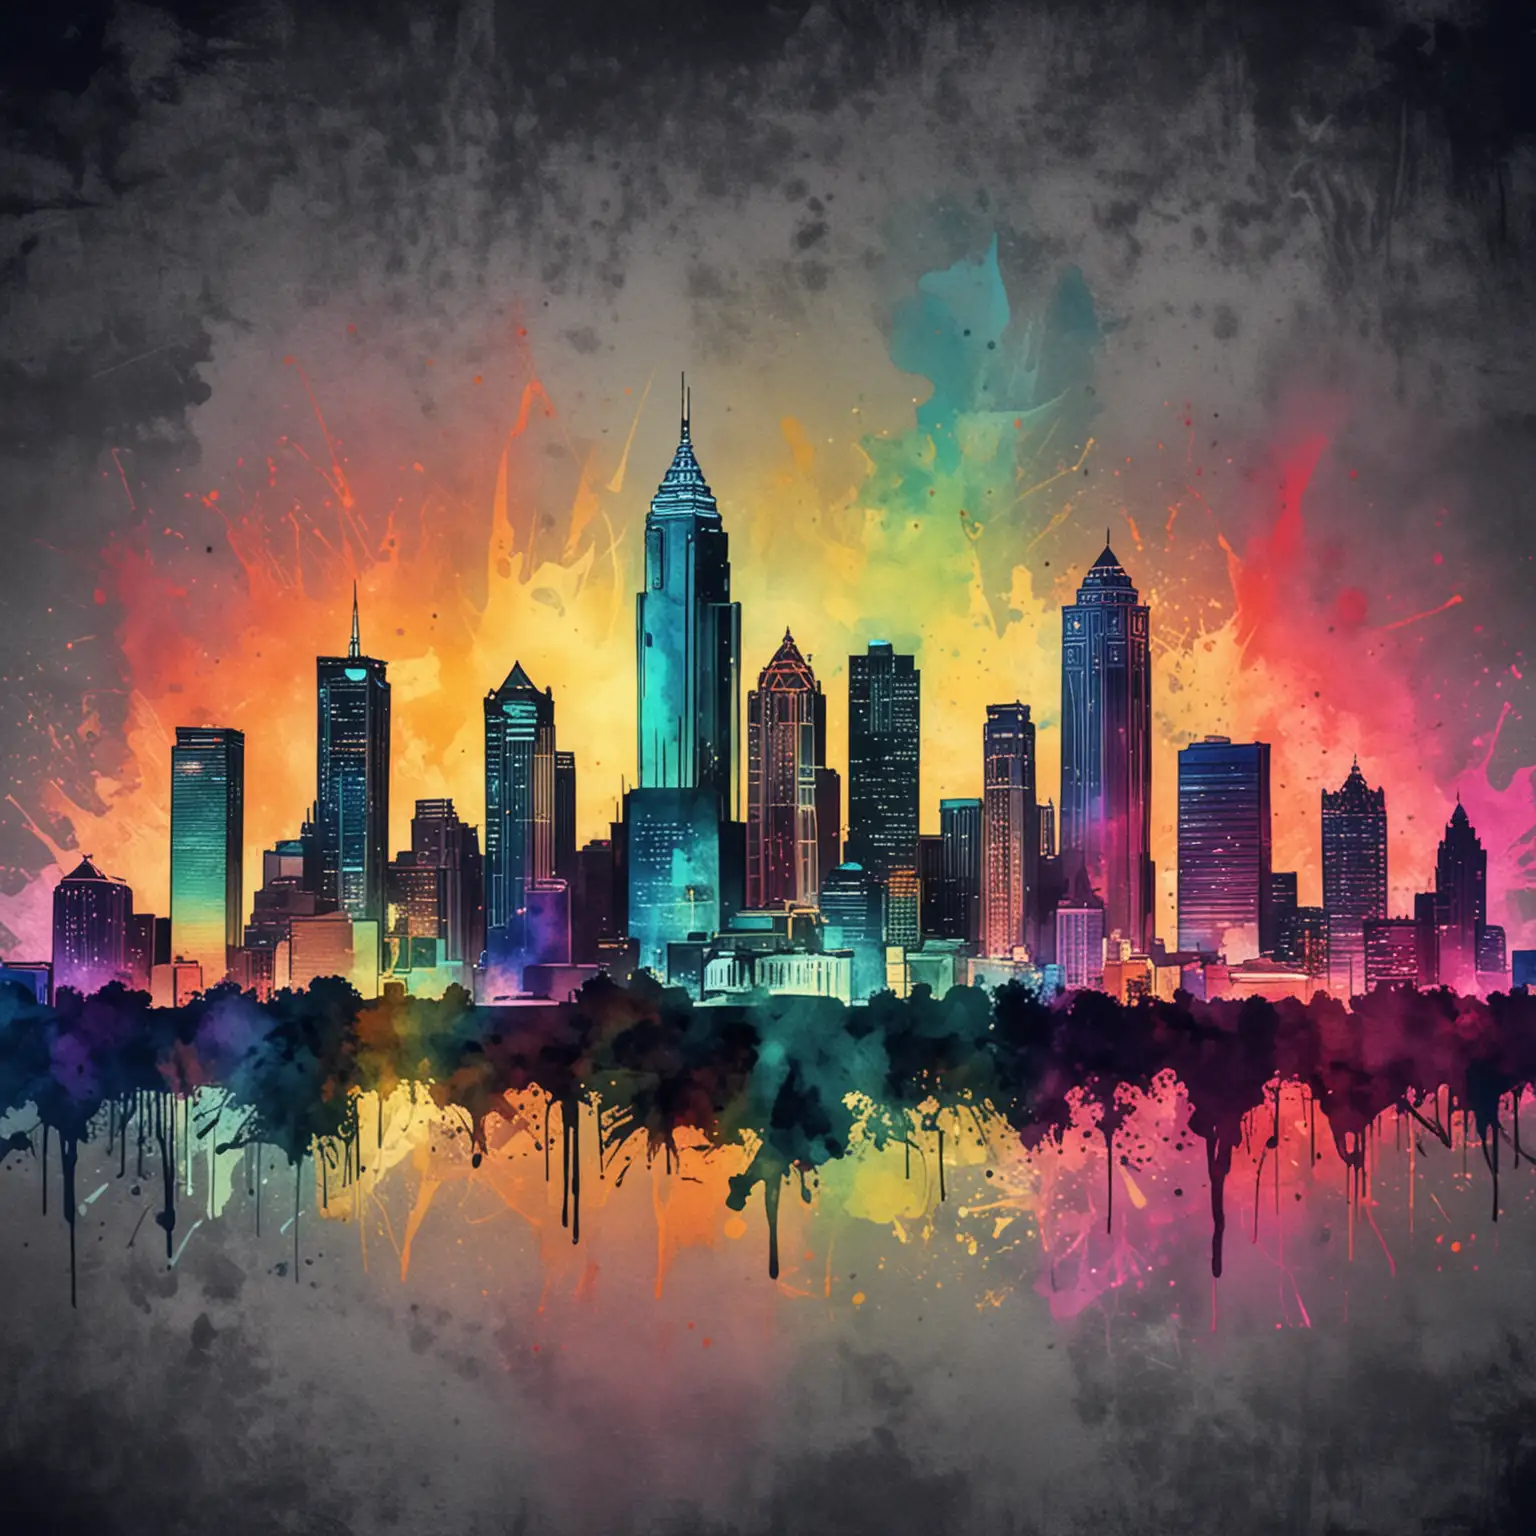 Atlanta skyline with a vibrant CMYK watercolor overlay
